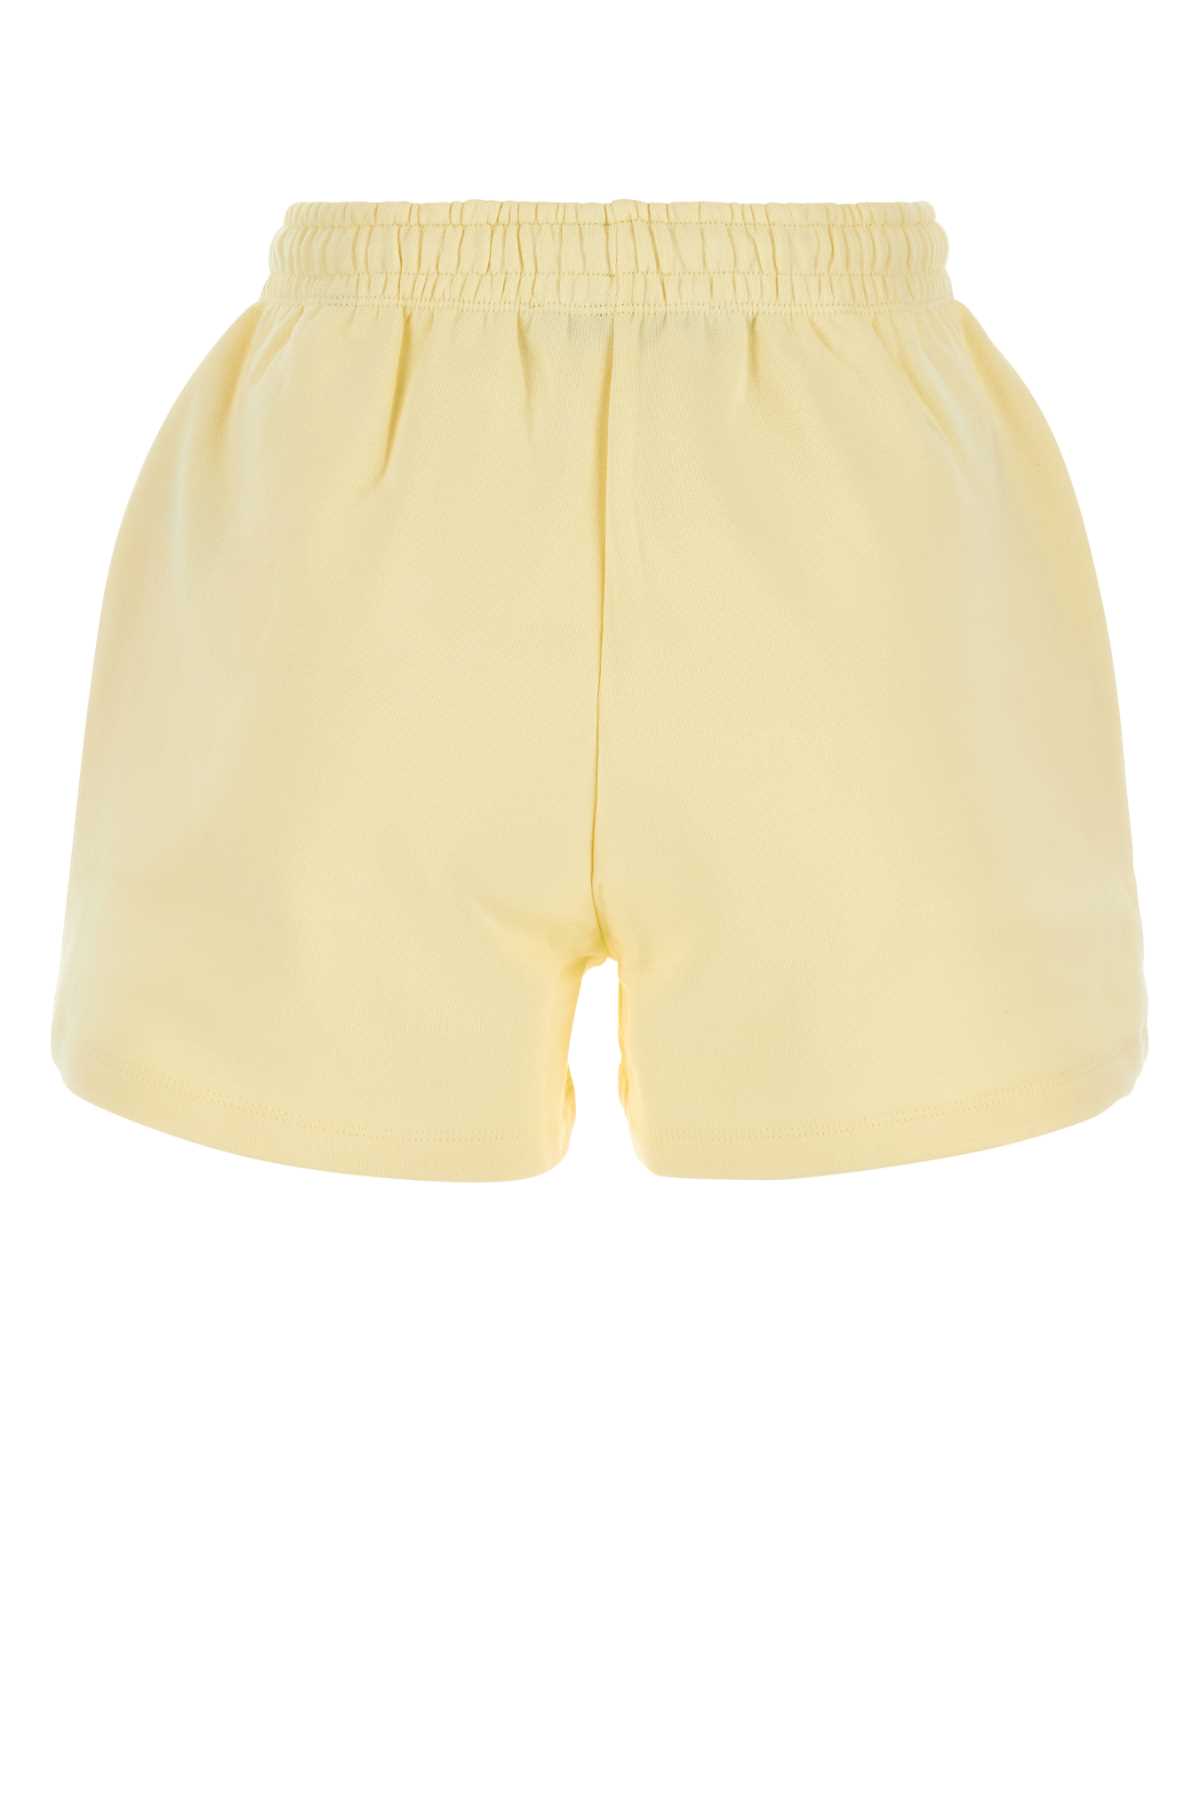 Rotate Birger Christensen Pastel Yellow Cotton Shorts In Trayellow